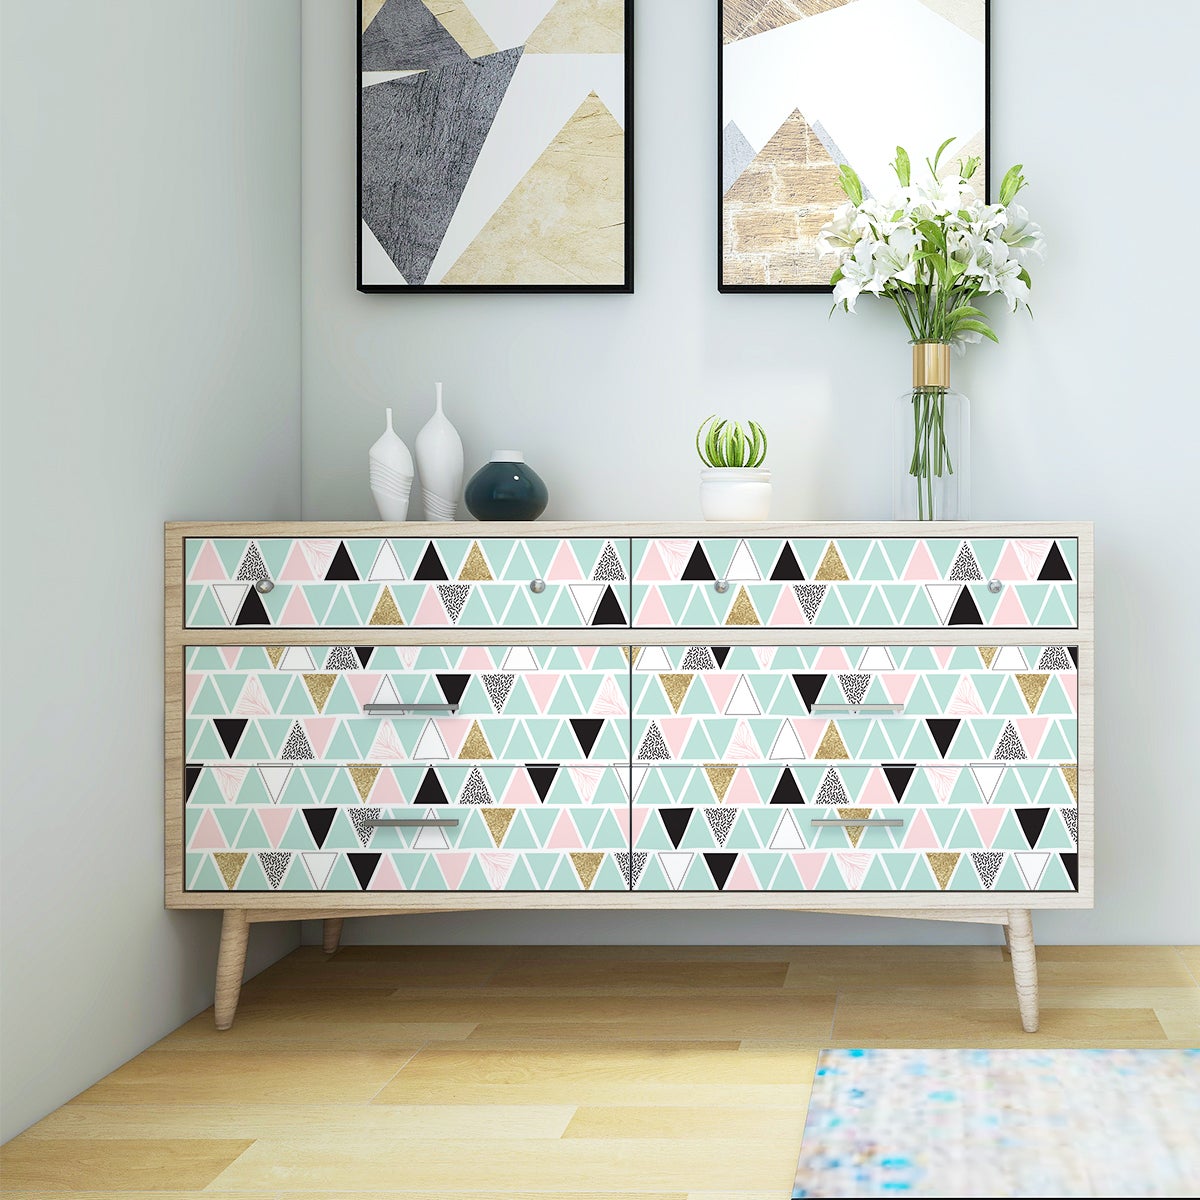 Vinilo muebles escandinavos clarikq - adhesivo de pared - revestimiento  sticker mural decorativo - 60x90cm